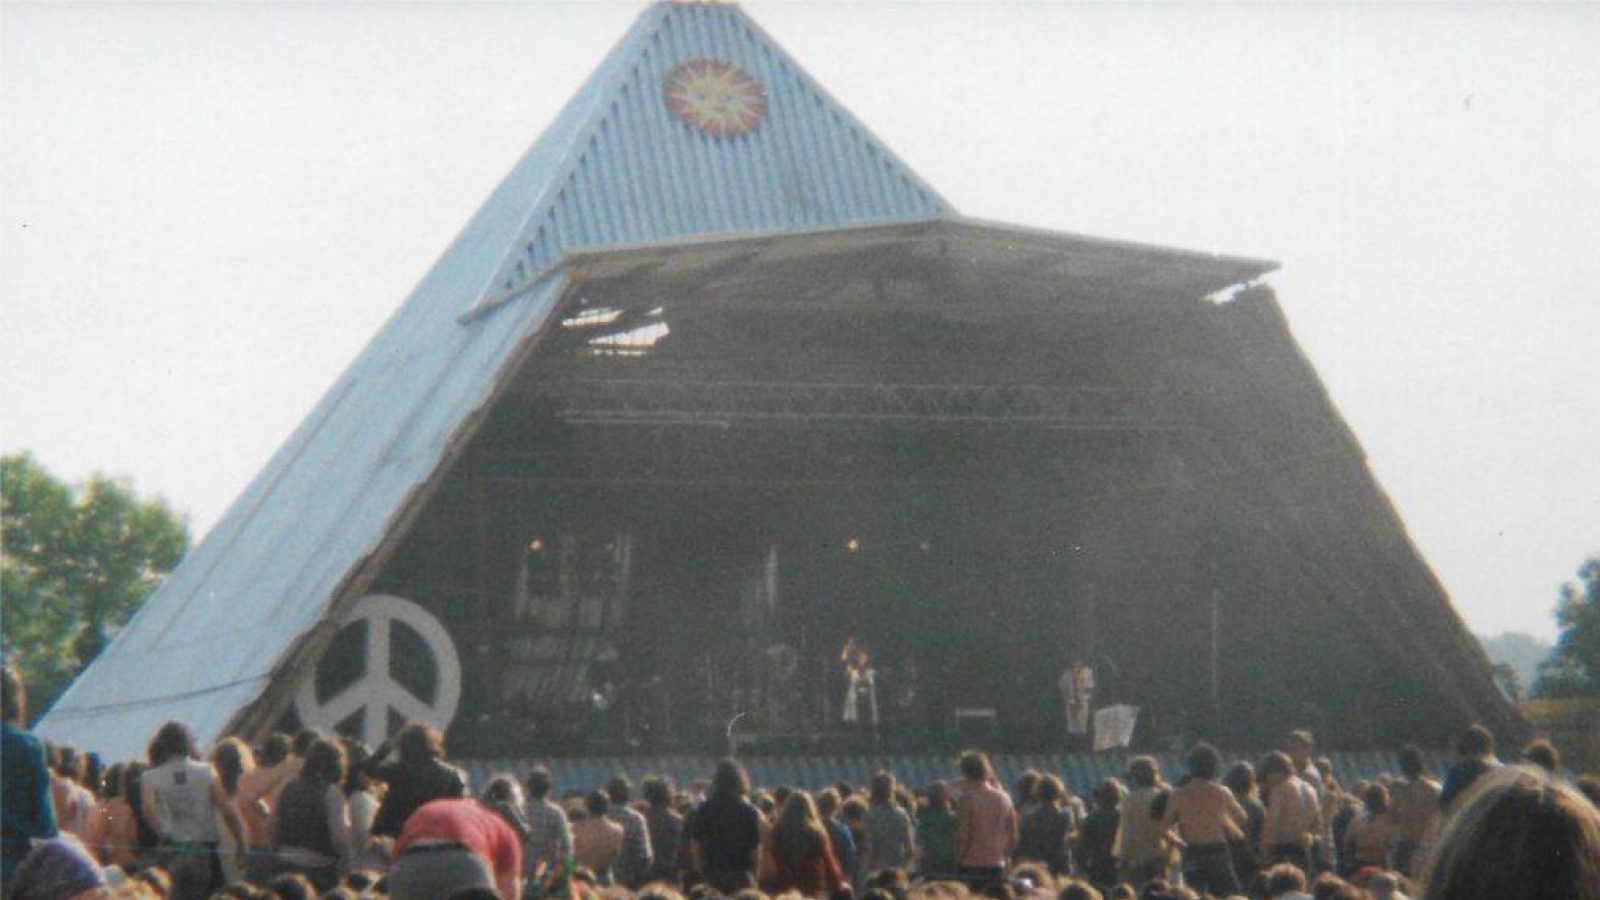 Pyramid Stage